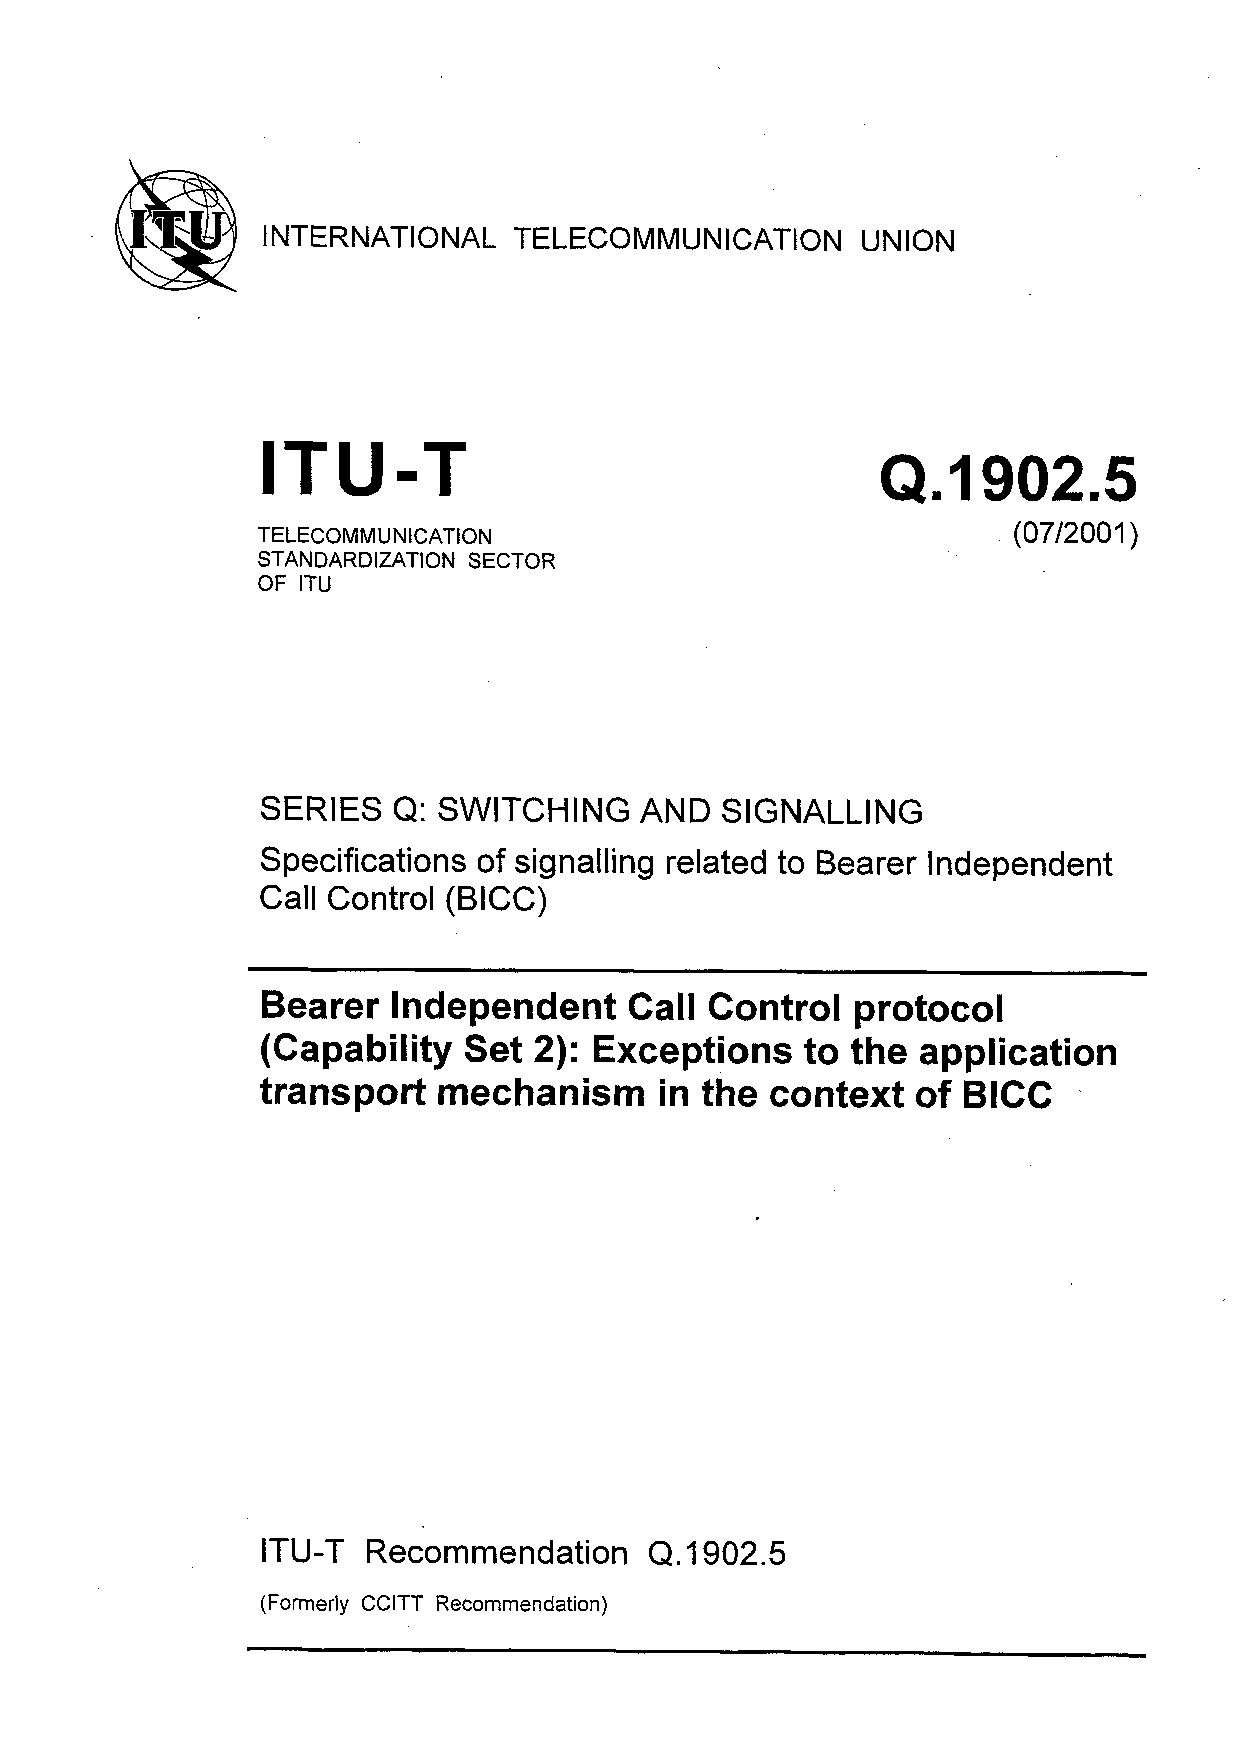 ITU-T Q.1902.5-2001